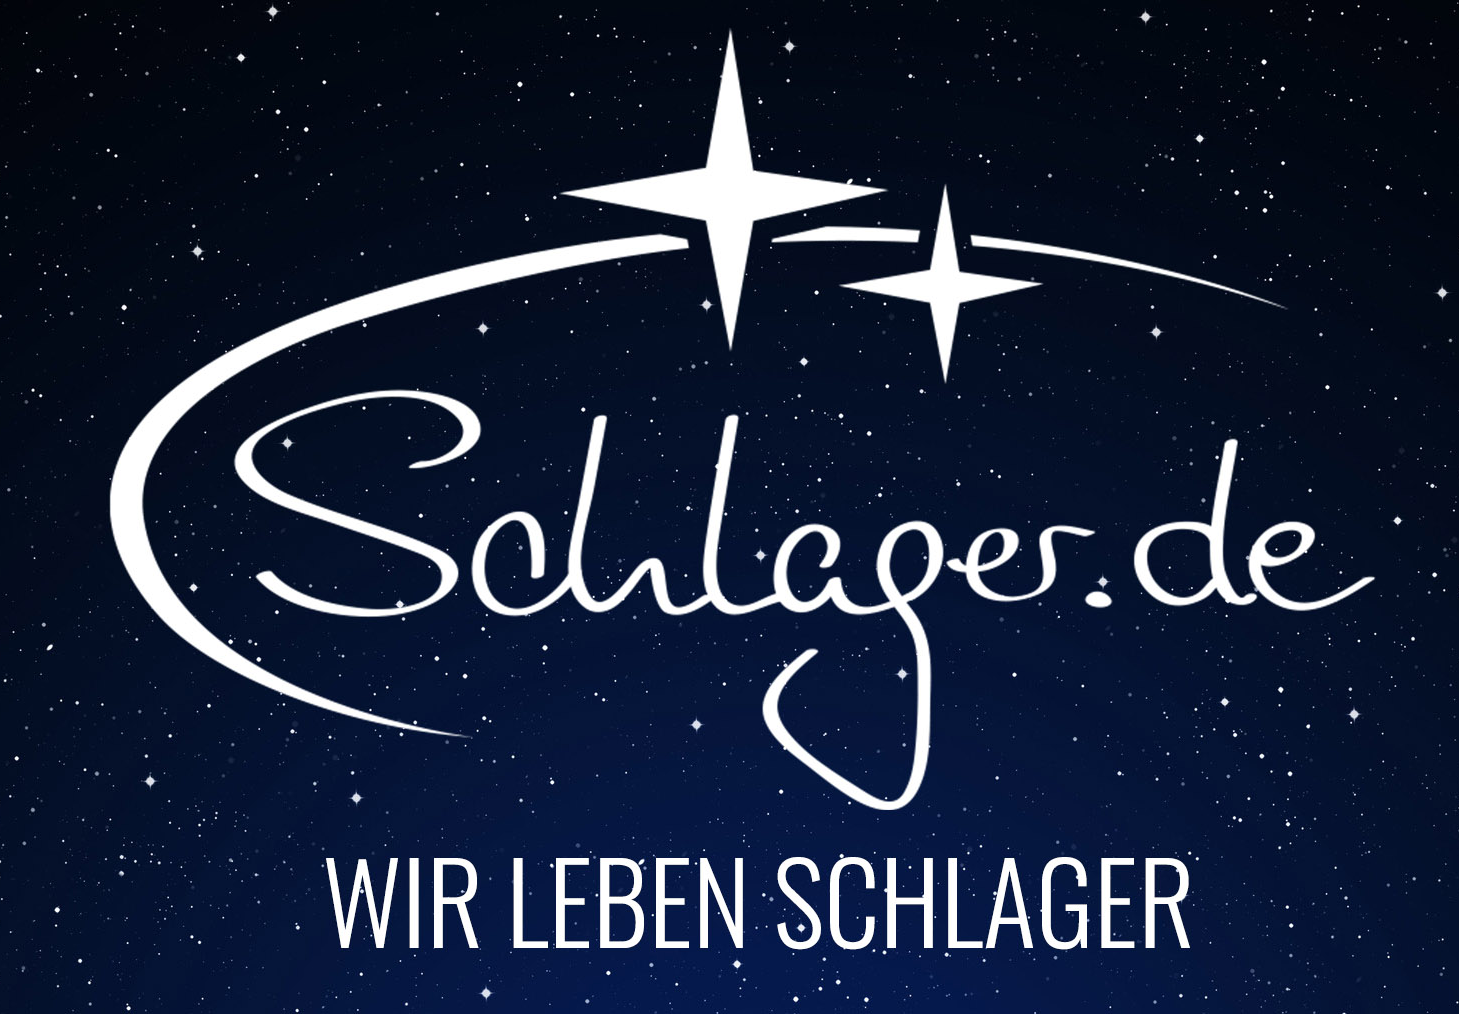 www.schlager.de